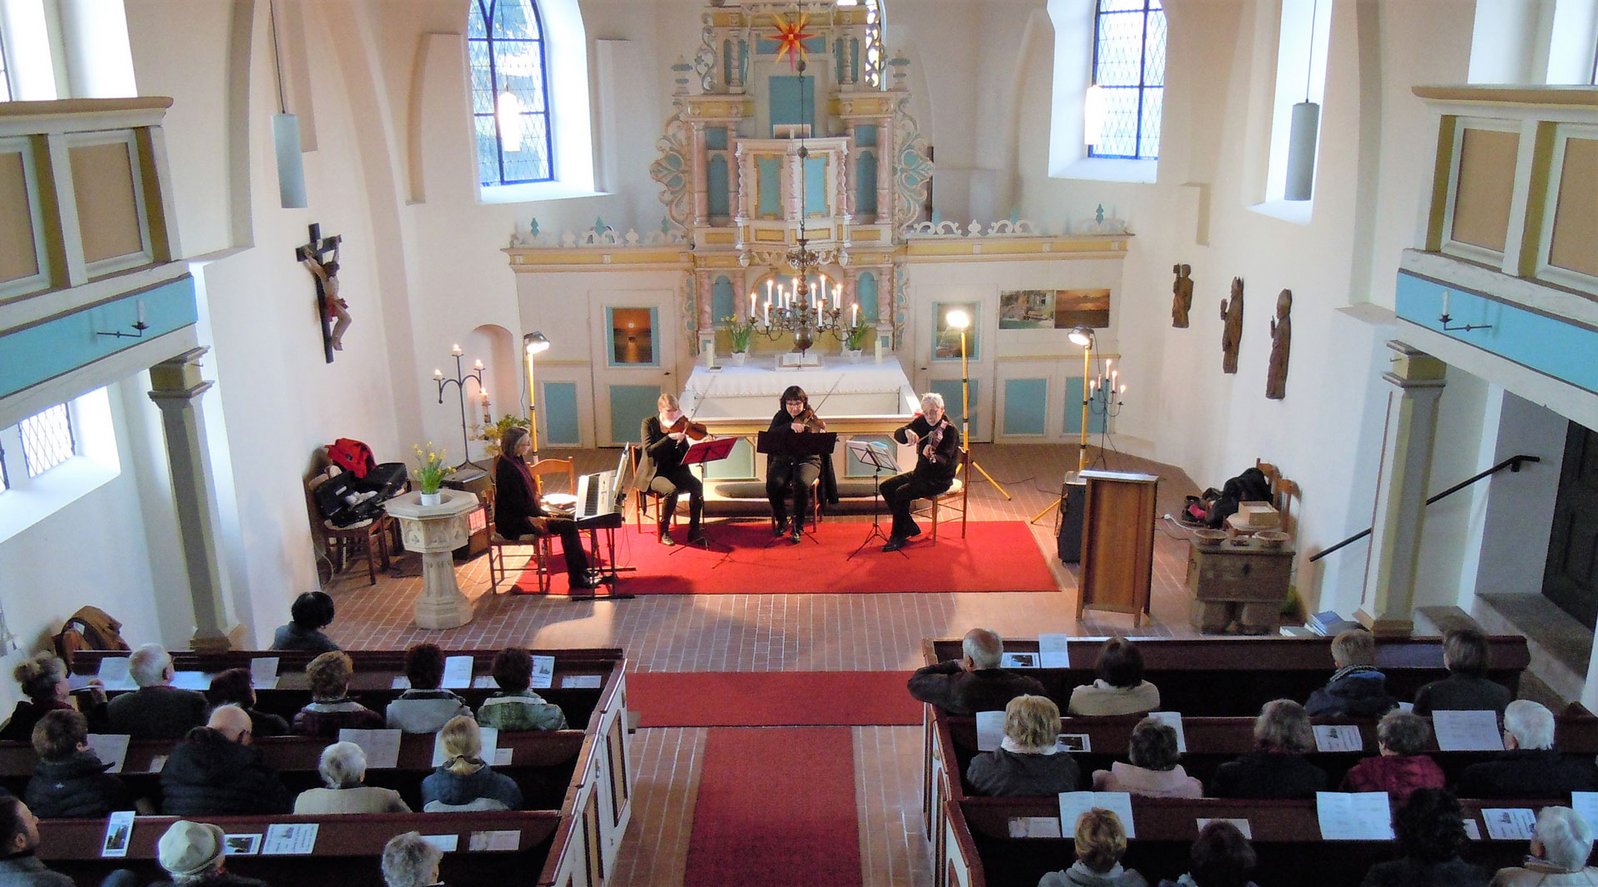 zeigt Innenraum Kirche mit Musikerensemble